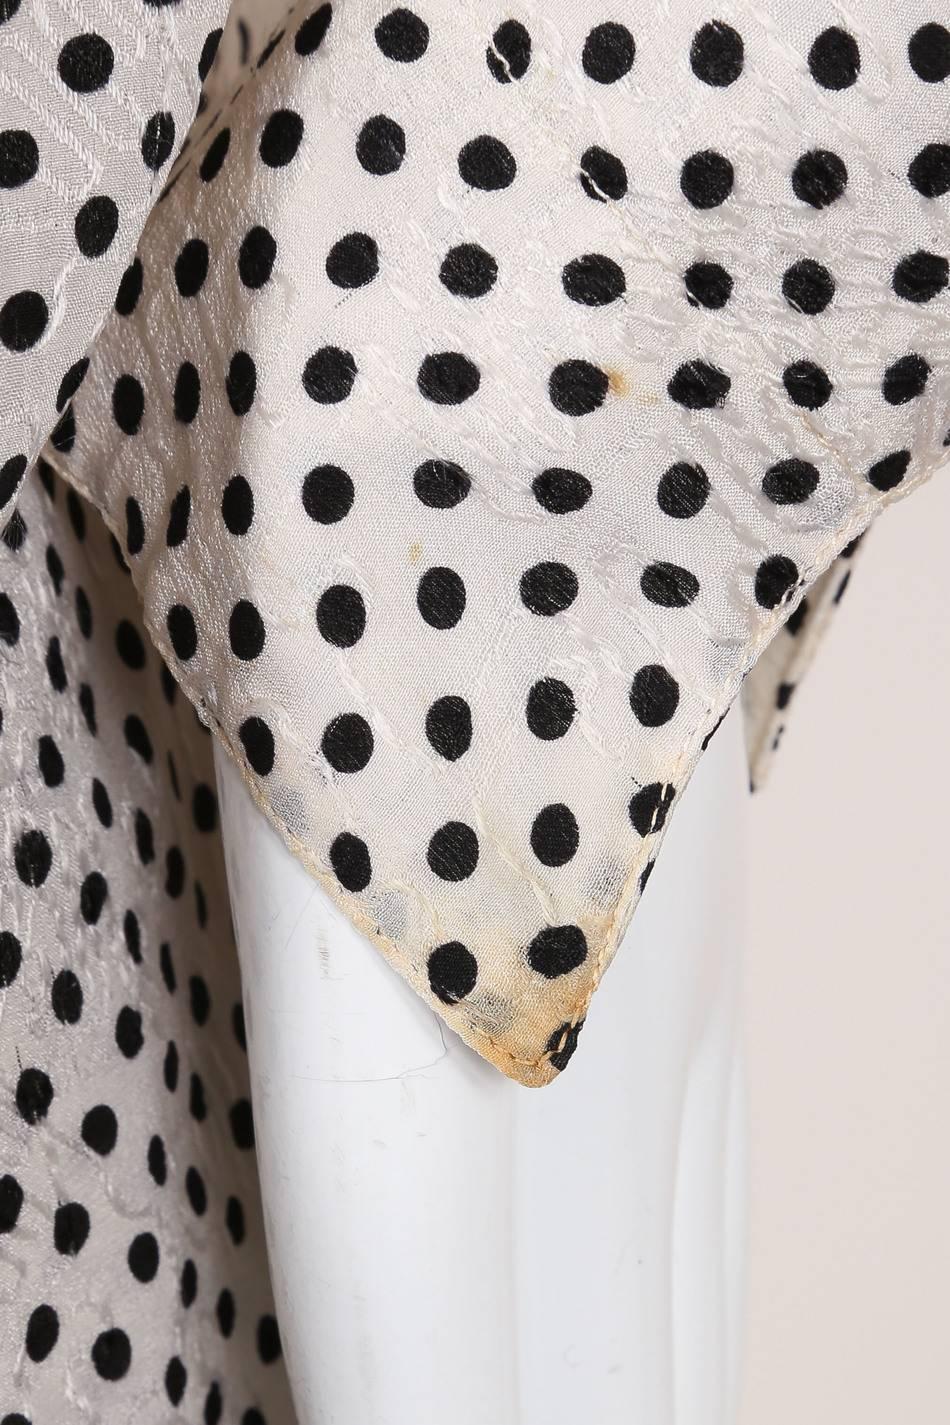 Chanel Cream Black Silk Jacquard Polka Dot Print Blouse Top Skirt Scarf Set SZ36 4